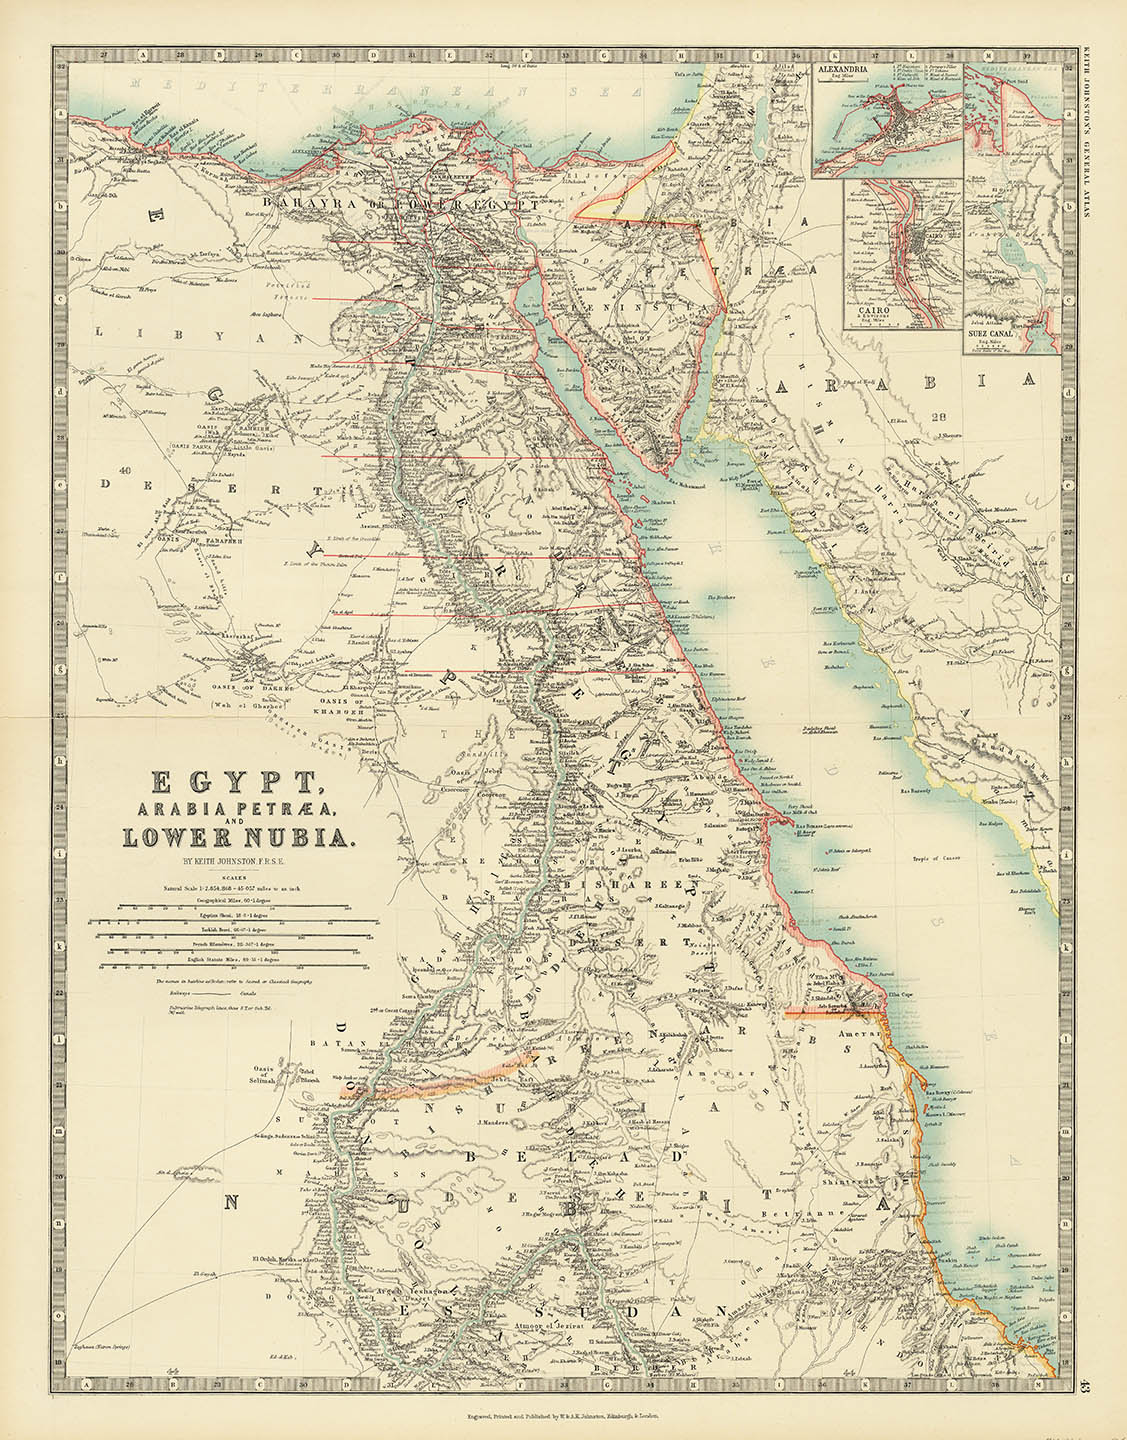 Egypt, Arabia Petraea, and Lower Nubia.